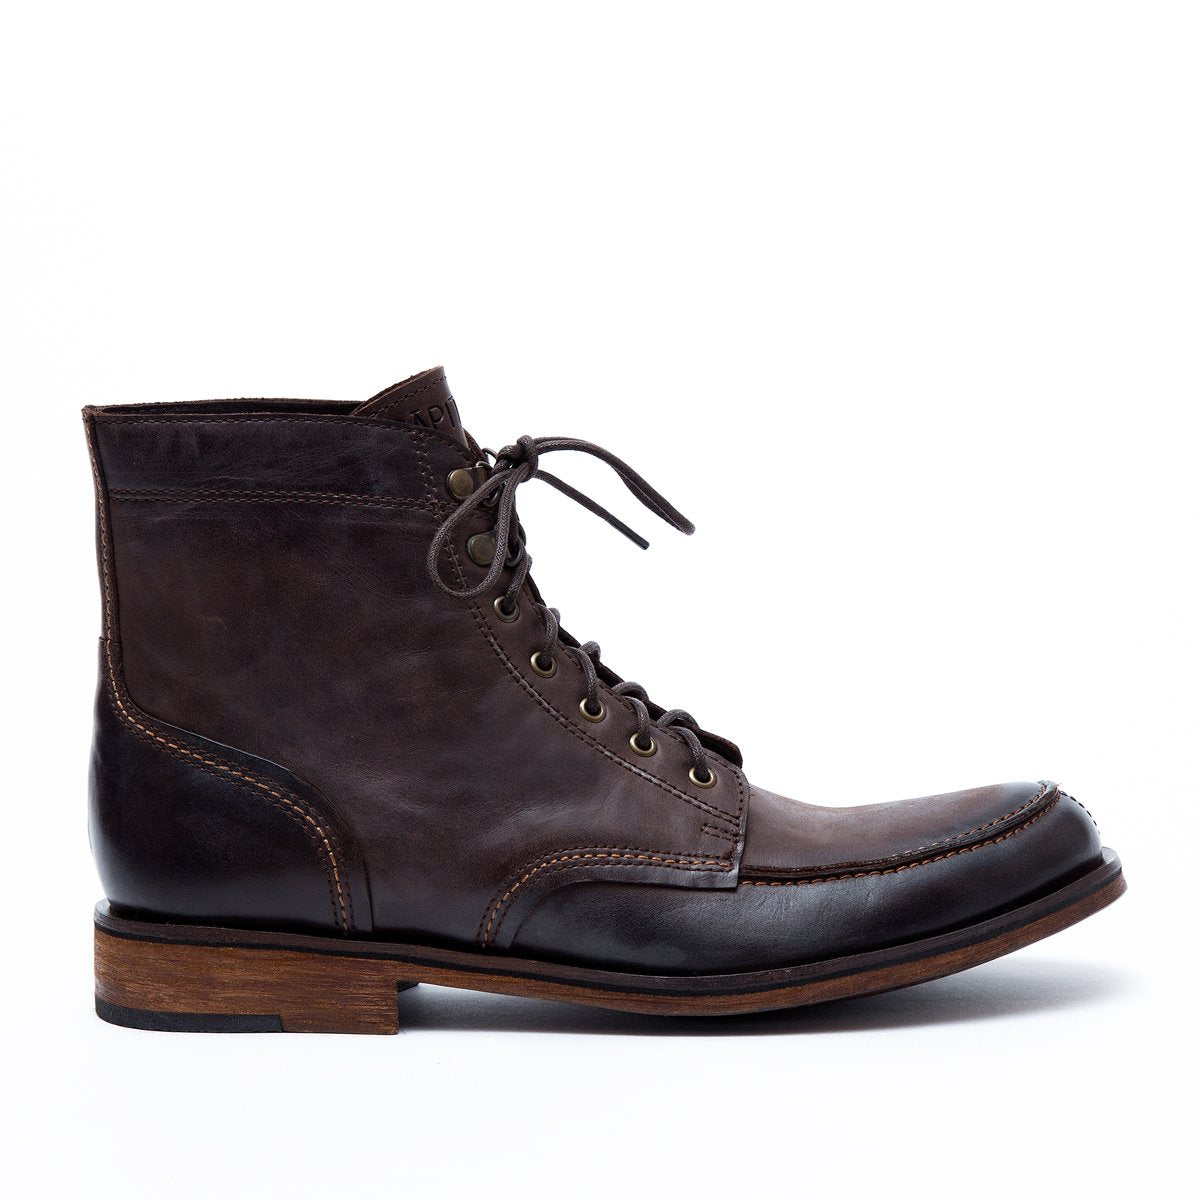 dark brown leather boots 